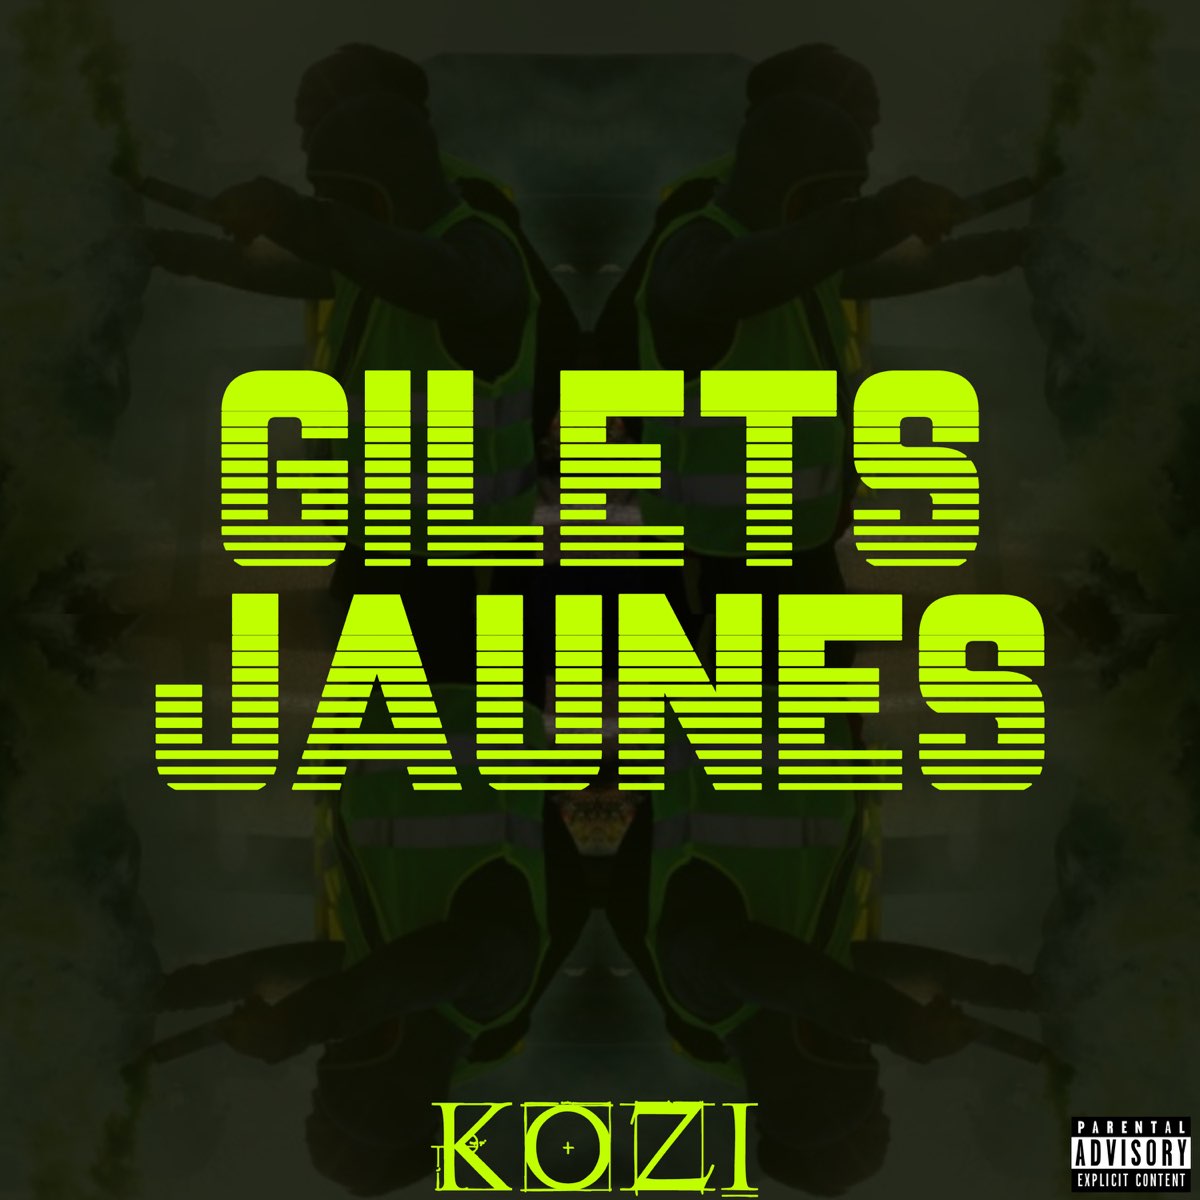 Gilets jaunes - Single by Kozi on Apple Music